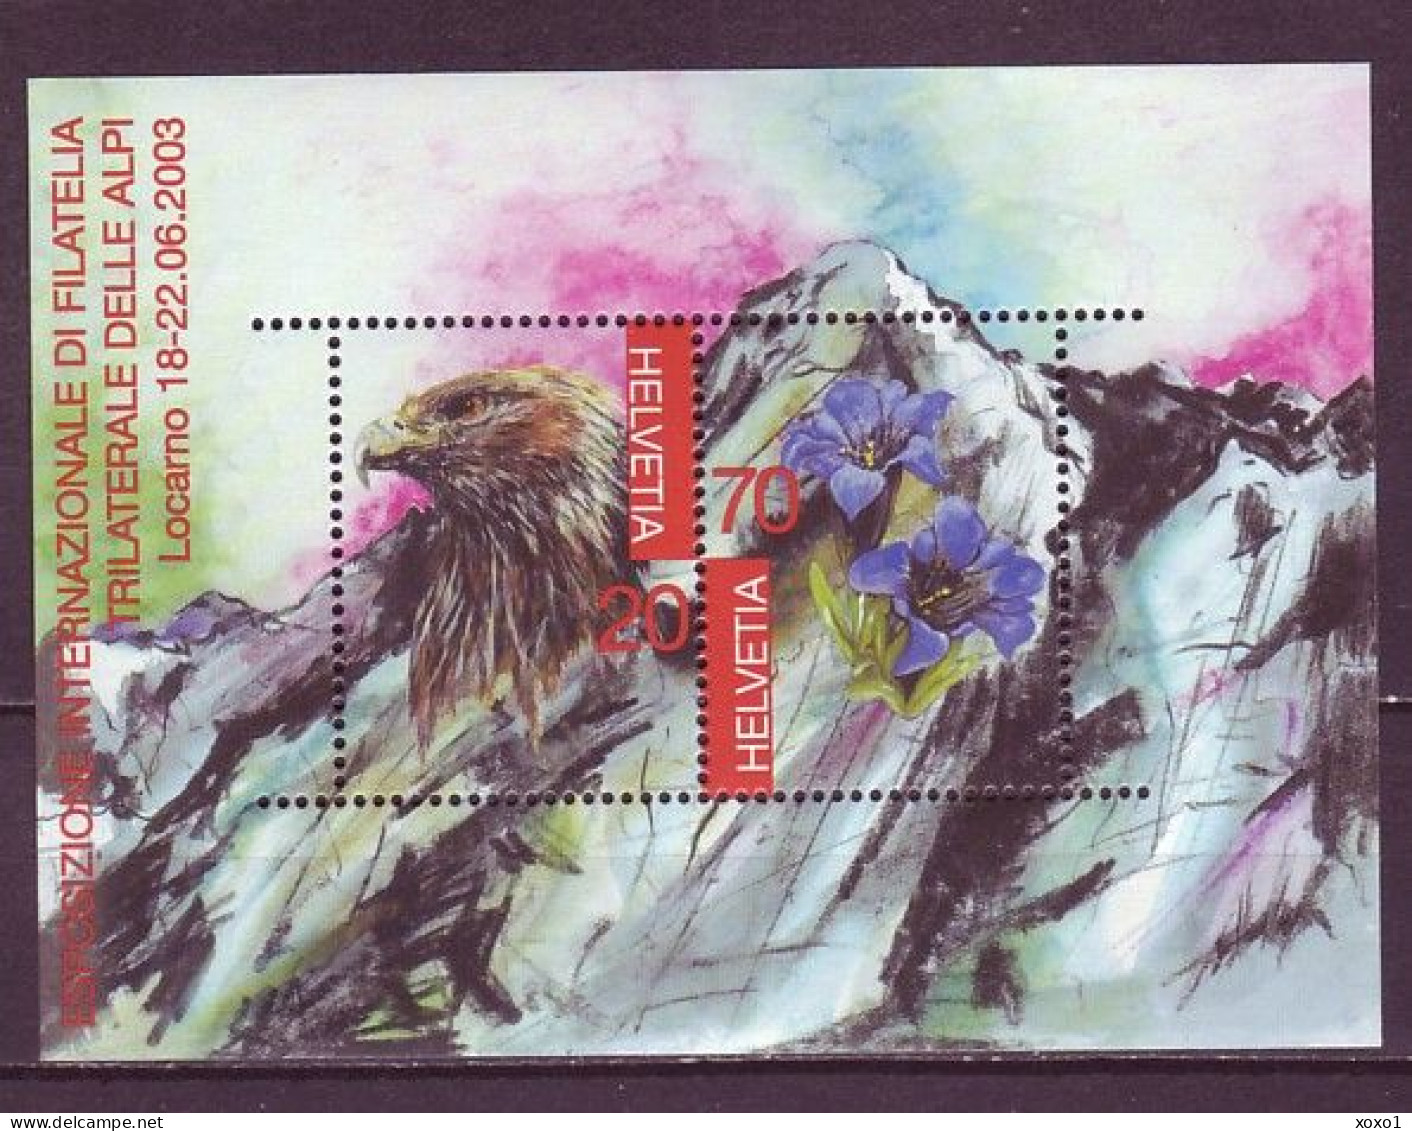 Switzerland 2003 MiNr. 1836 - 1837 (Block 33) Mont Dolent France–Switzerland–Italy Border Triangle S\sh MNH** 2.00 € - Mountains